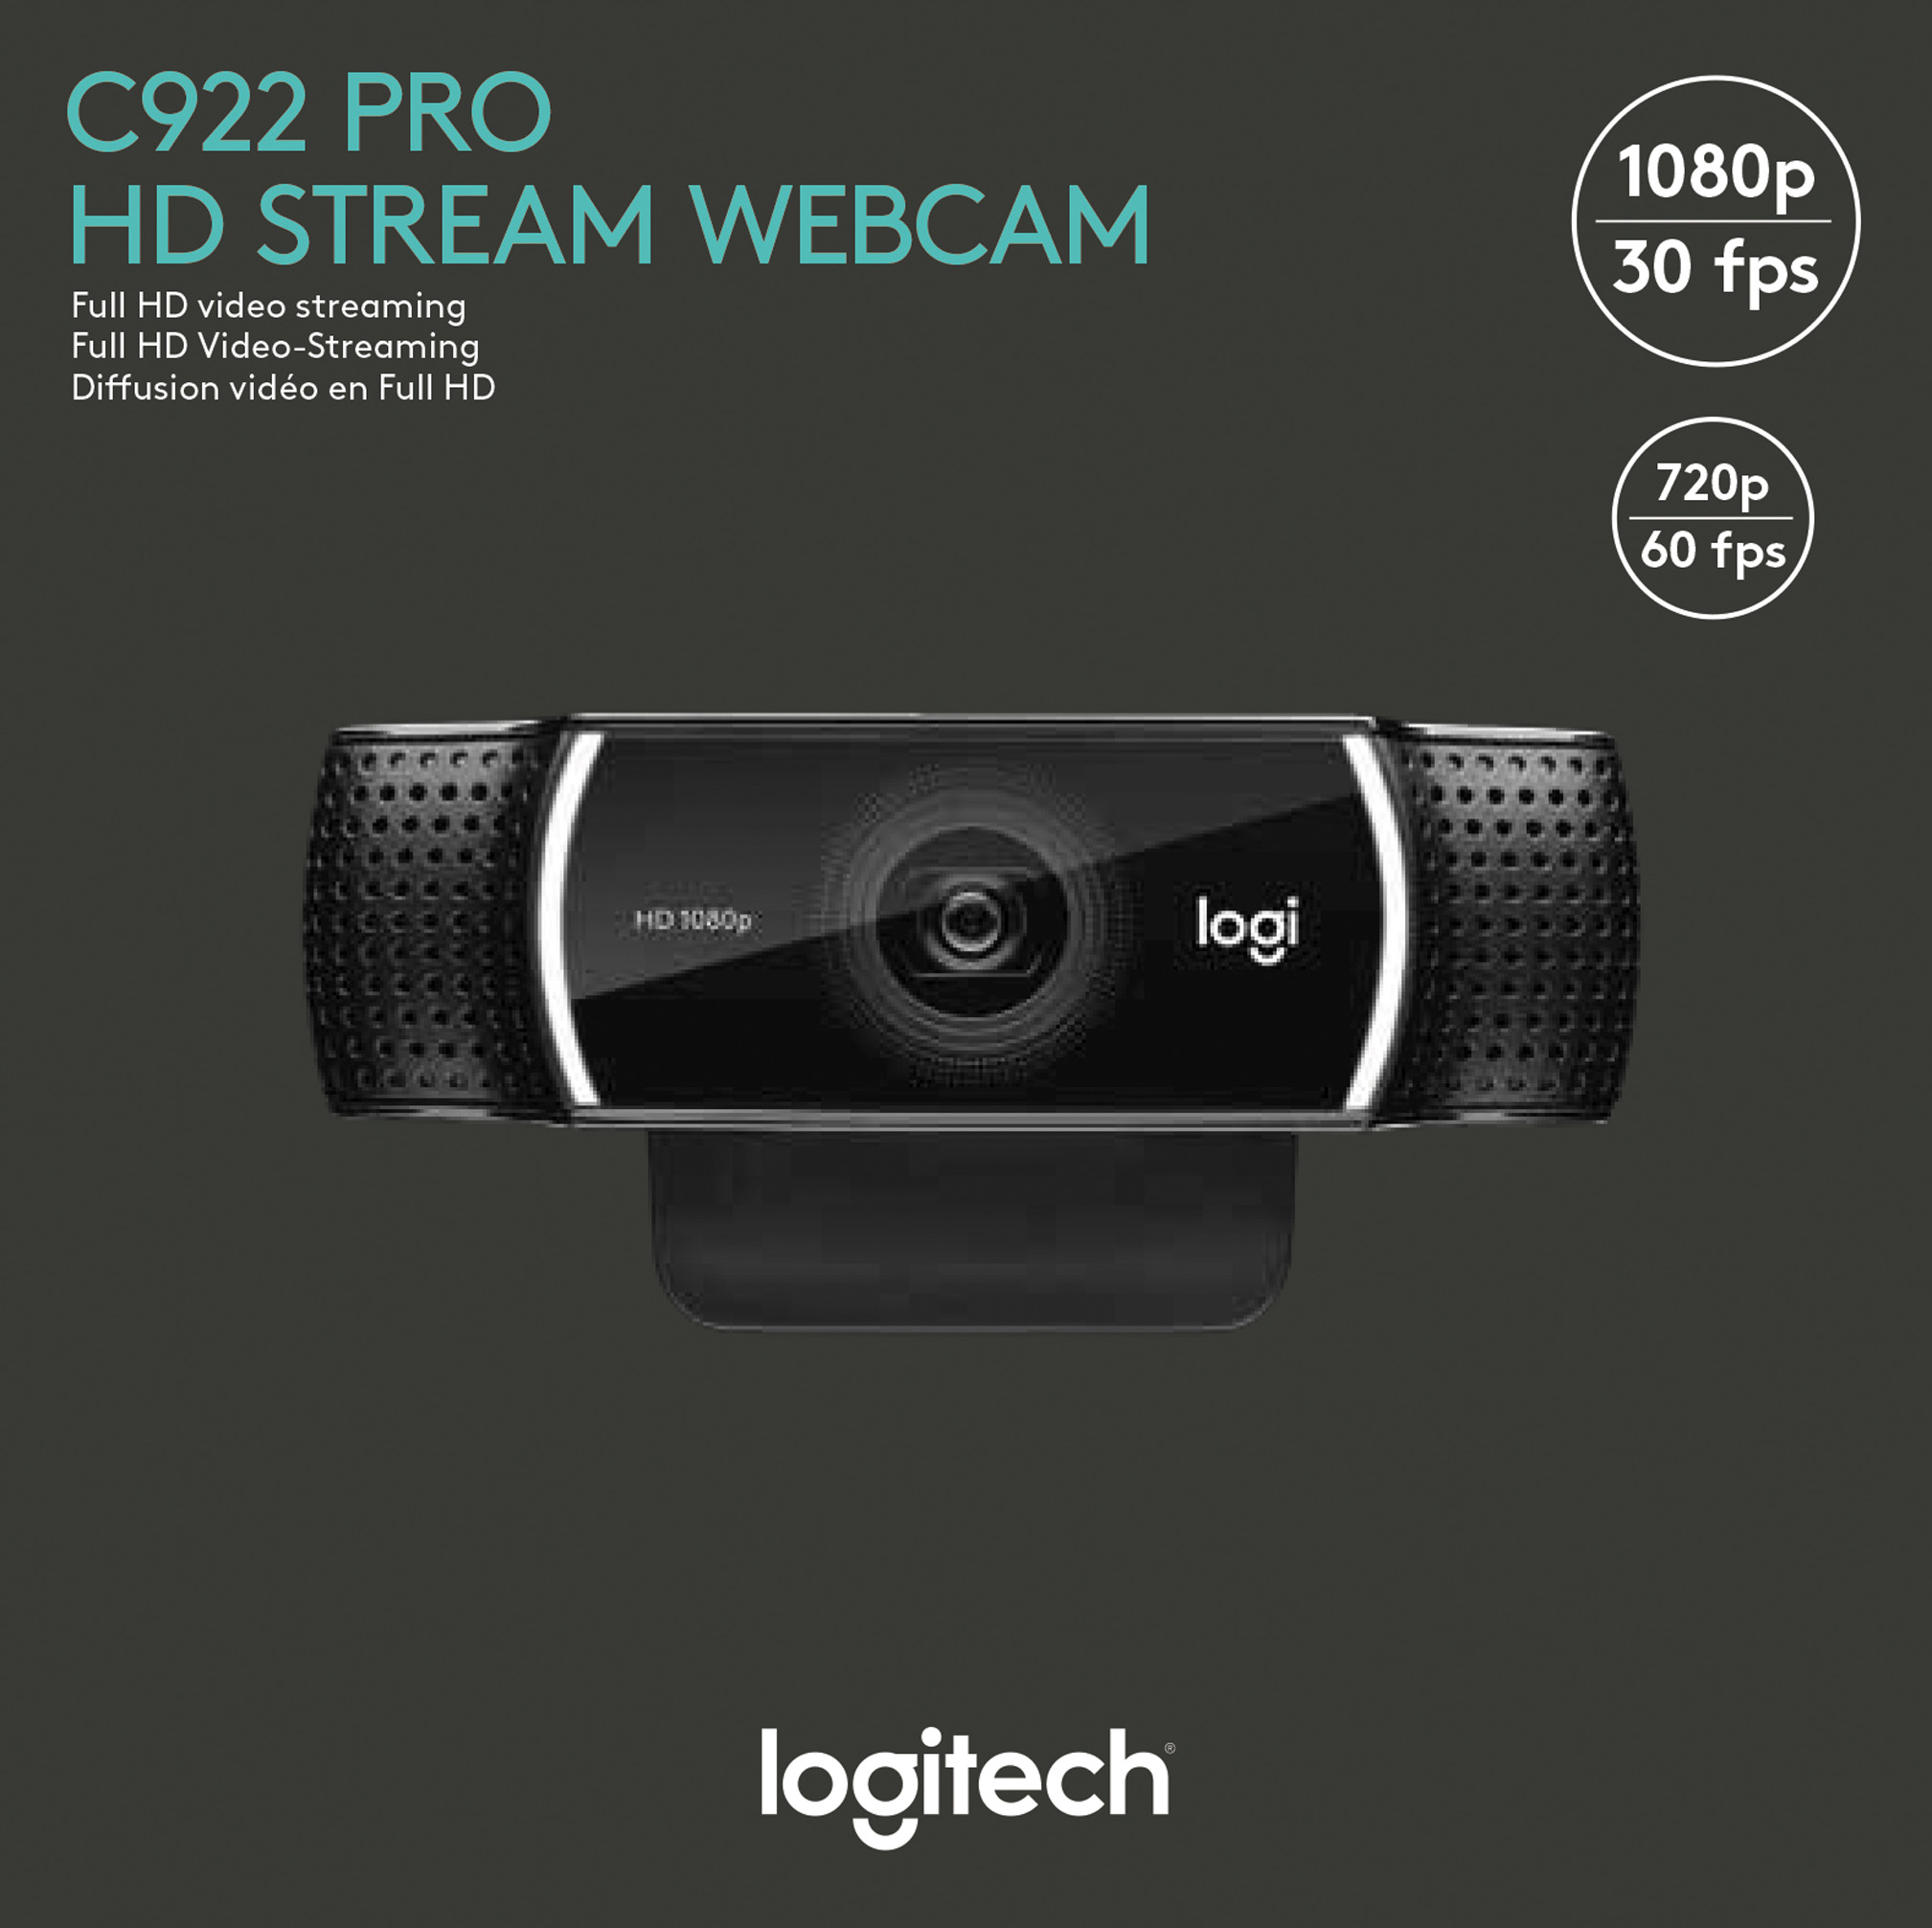 Logitech Webcam C922 Pro Stream, Full HD 1080p, schwarz 1920x1080, 30 FPS, USB, Retail